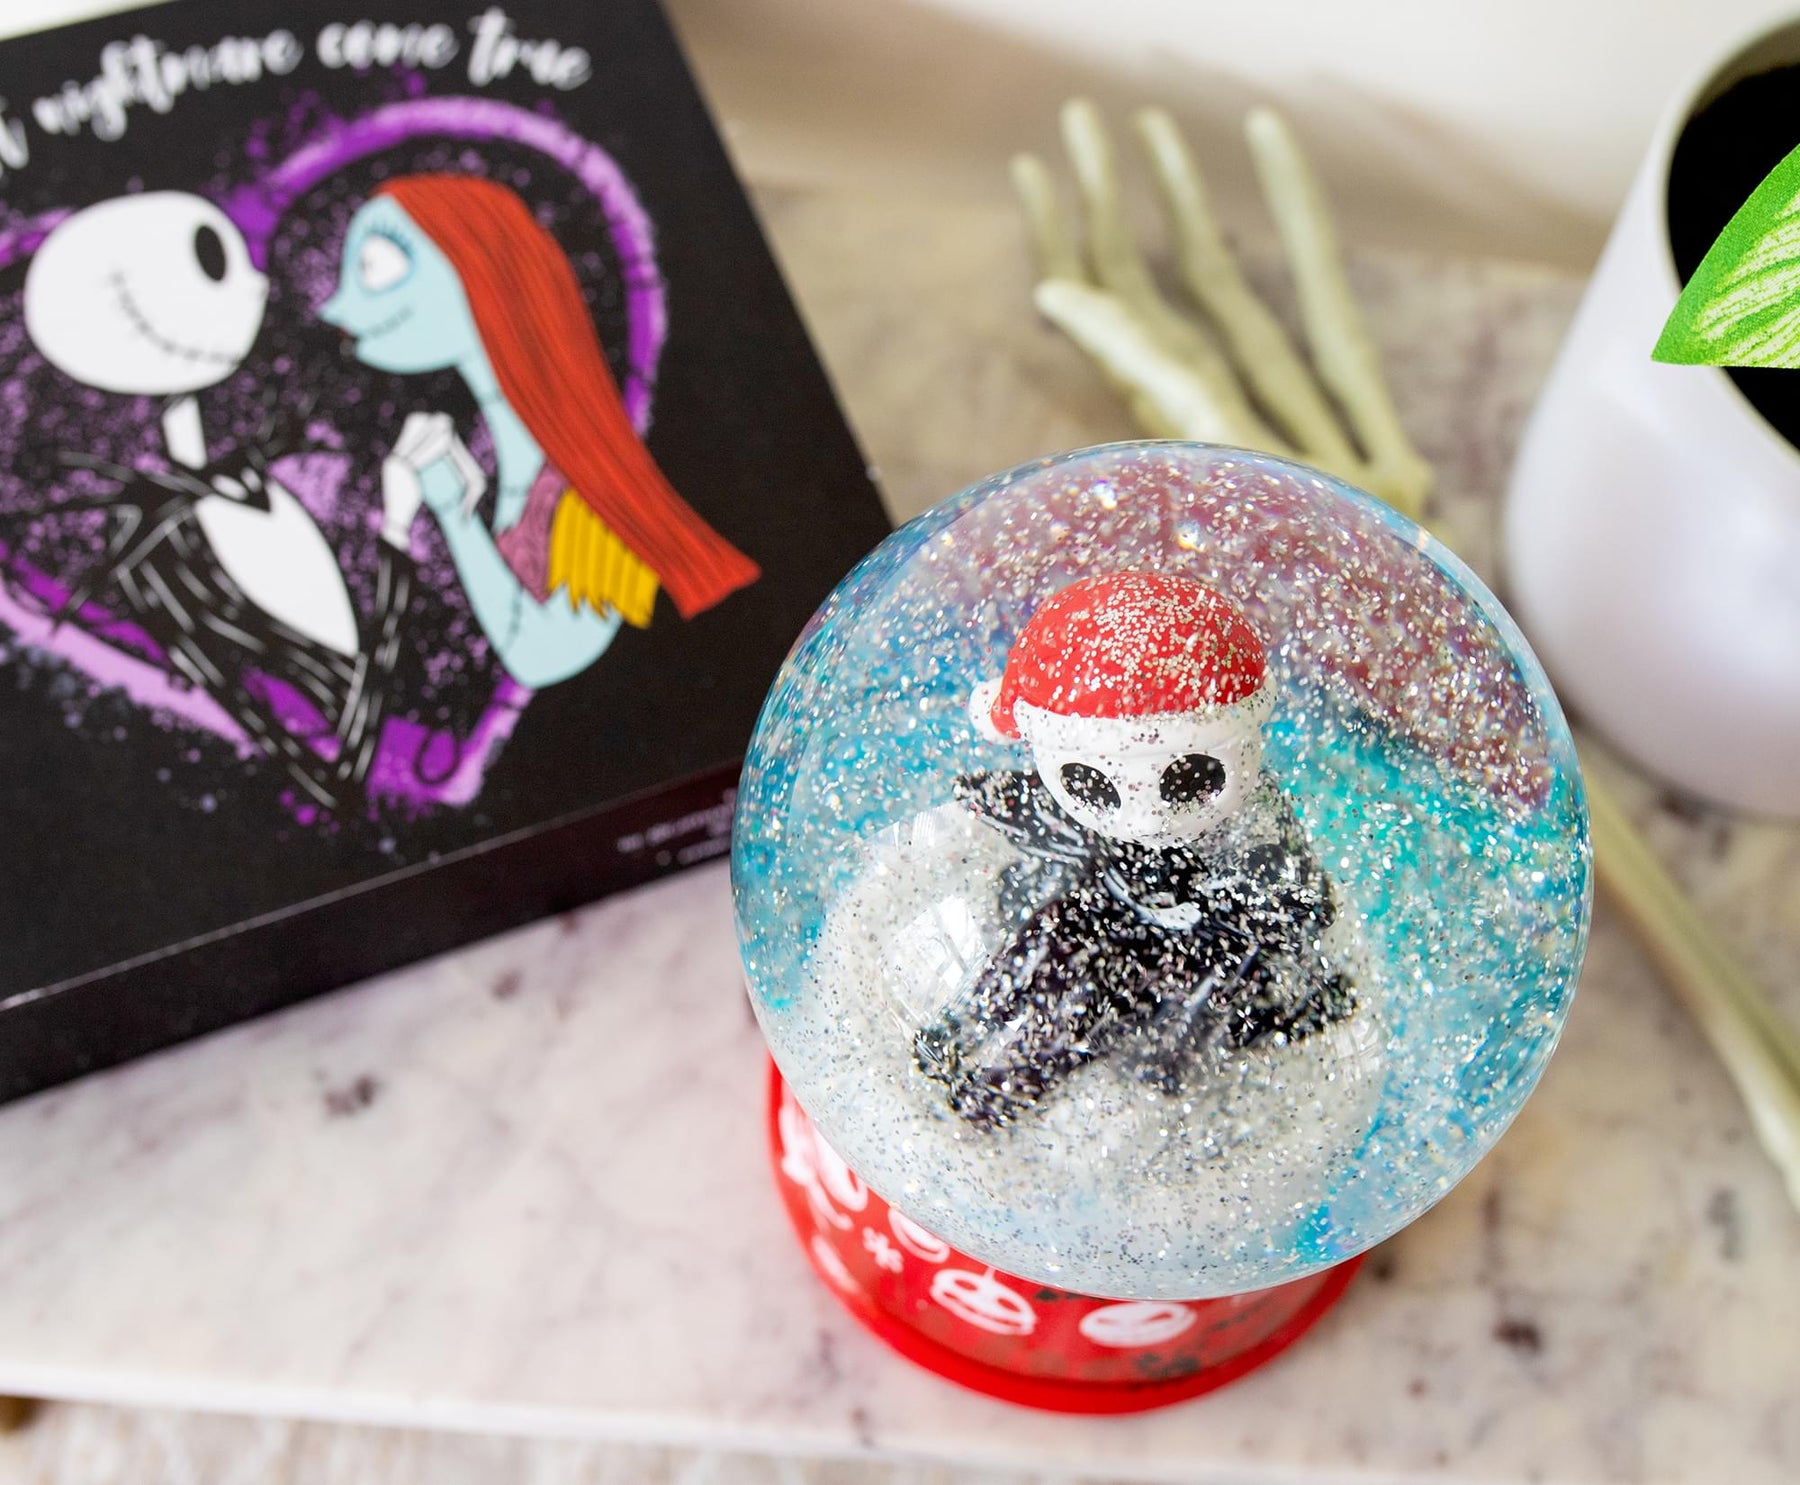 Disney The Nightmare Before Christmas Santa Jack 6-Inch Light-Up Snow Globe